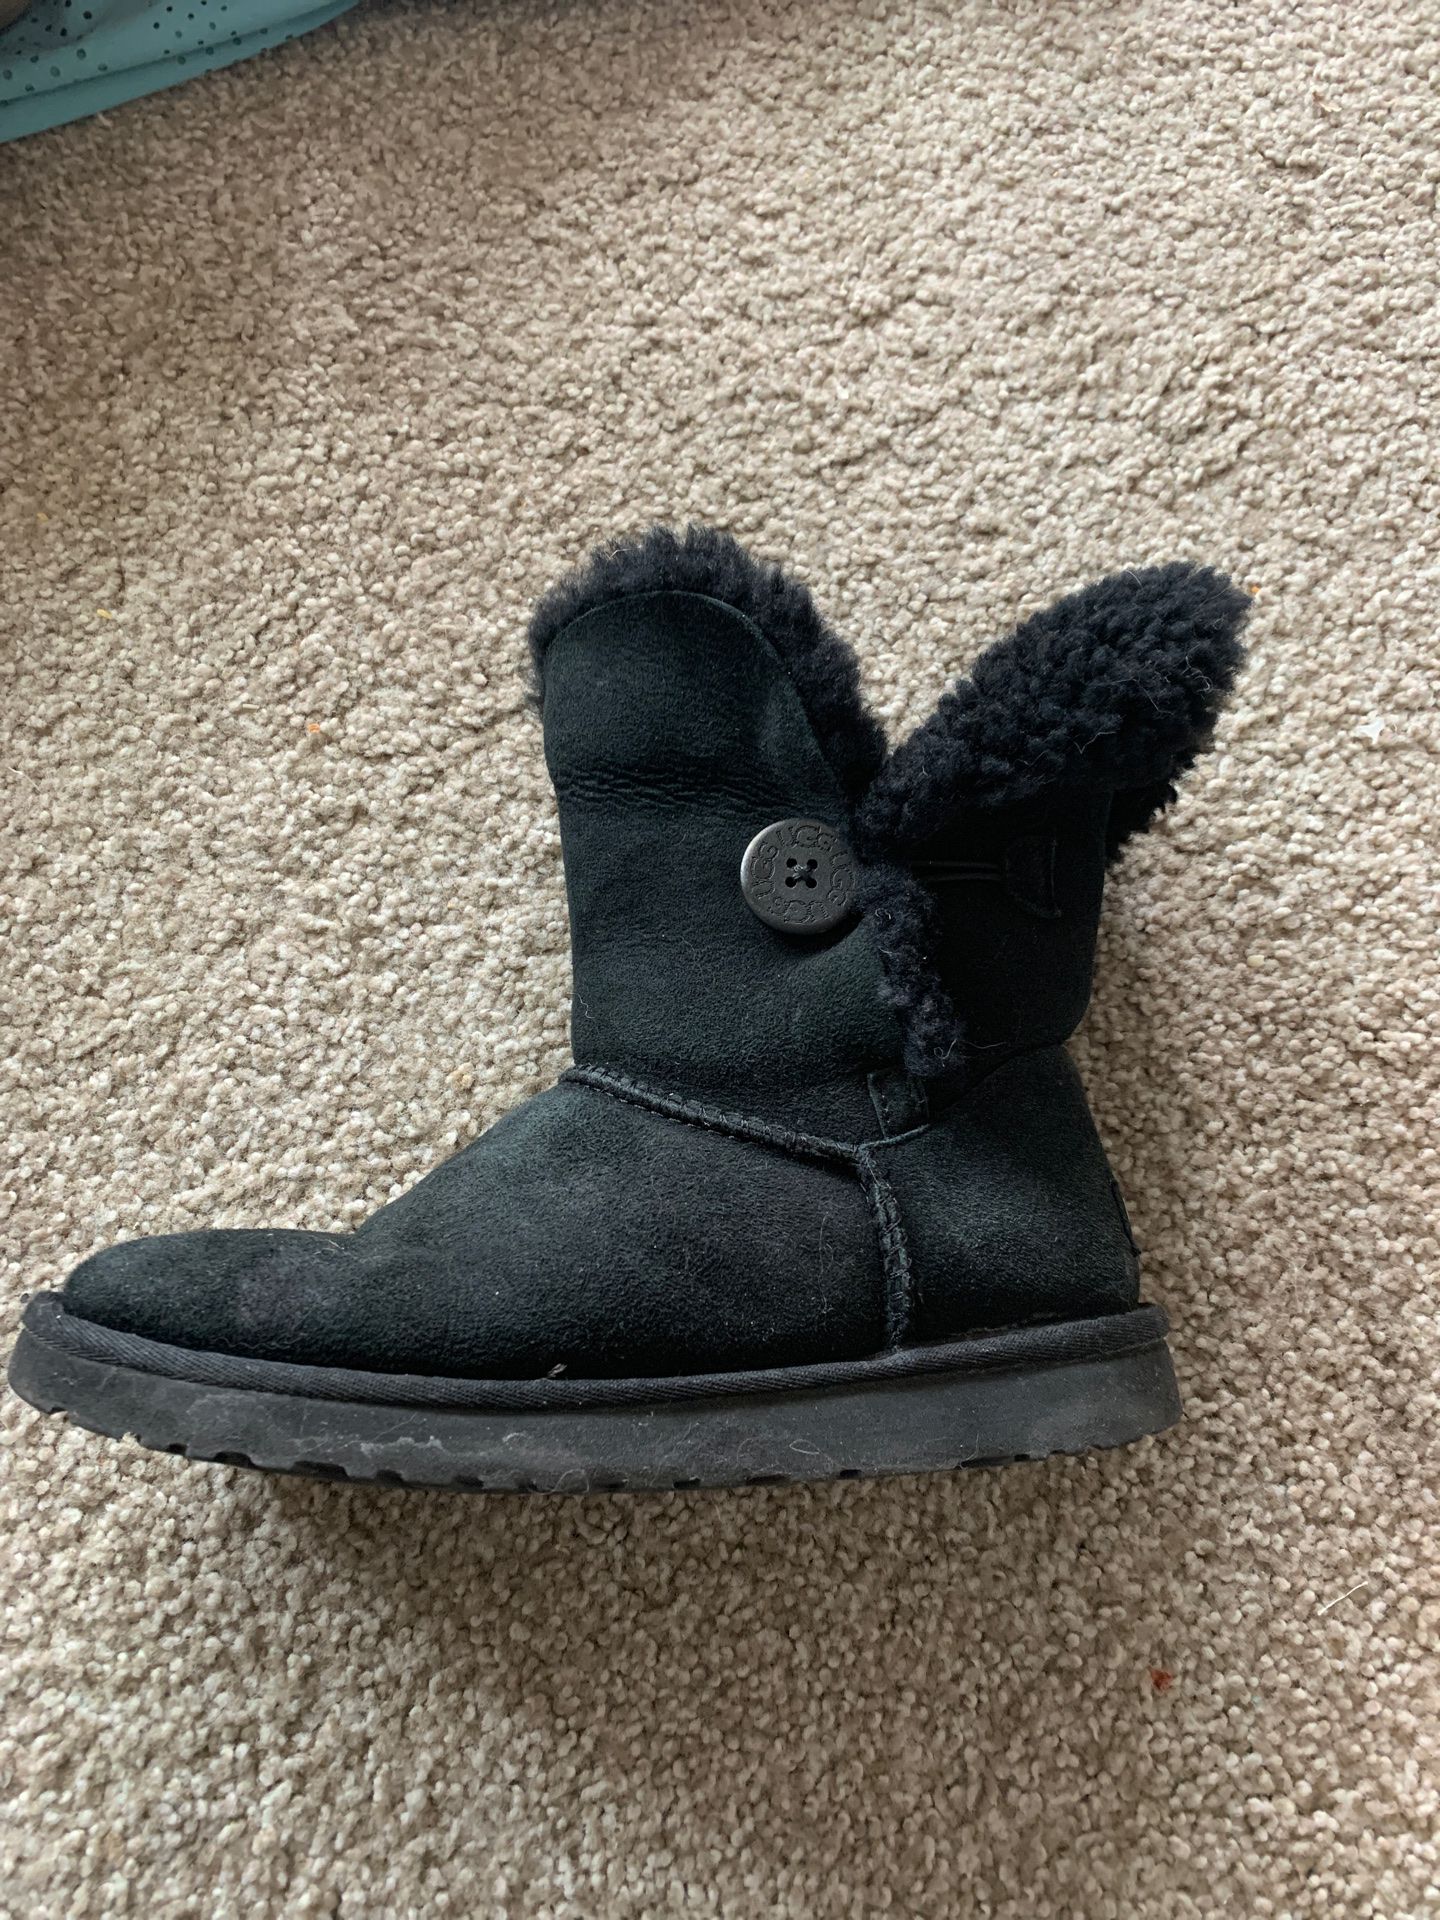 Black UGG boots size 7